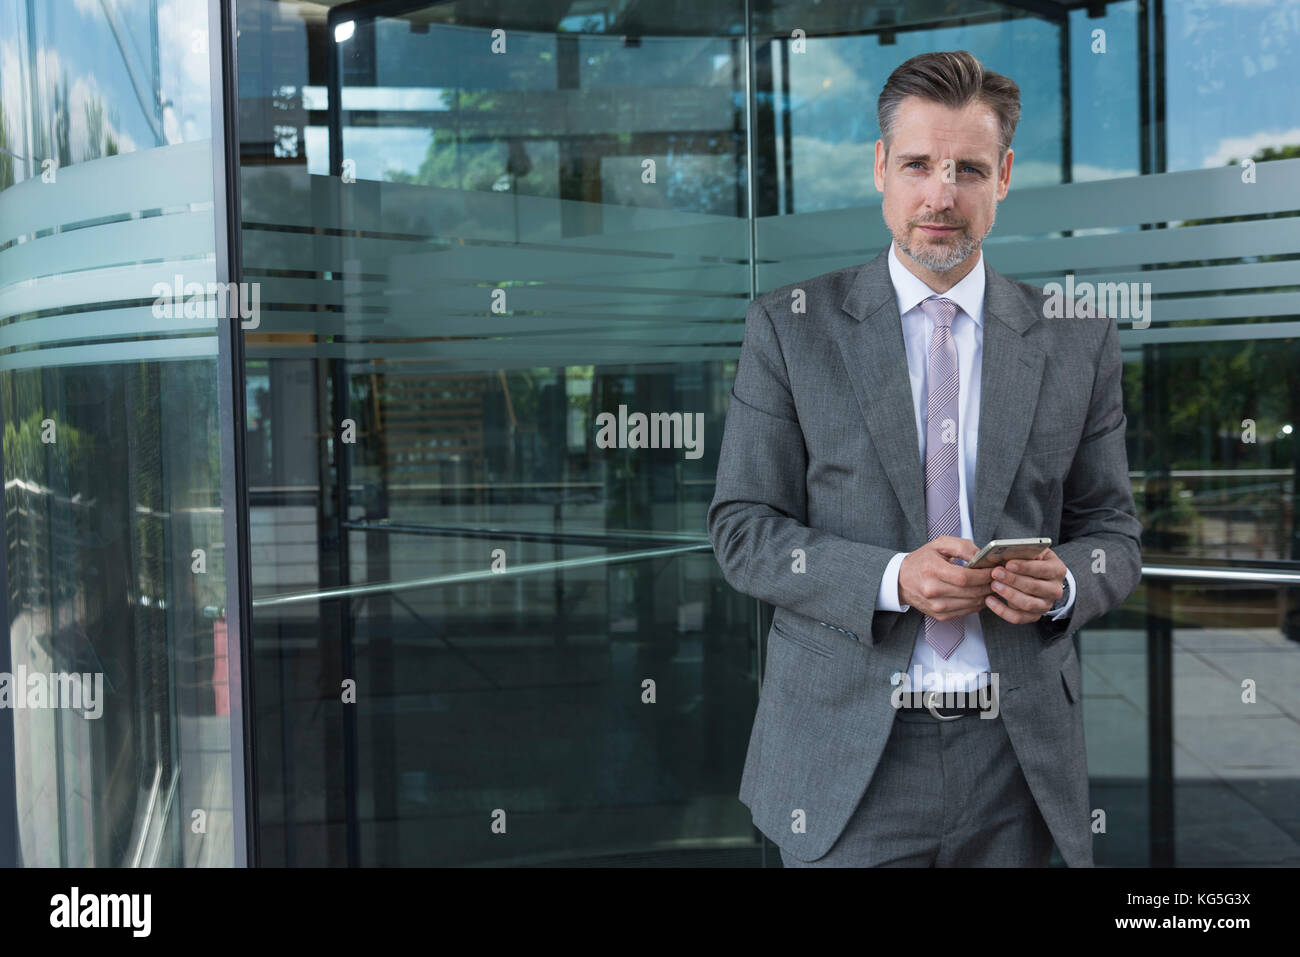 businessman with Smartphone in front of glass revolving door Stock Photo